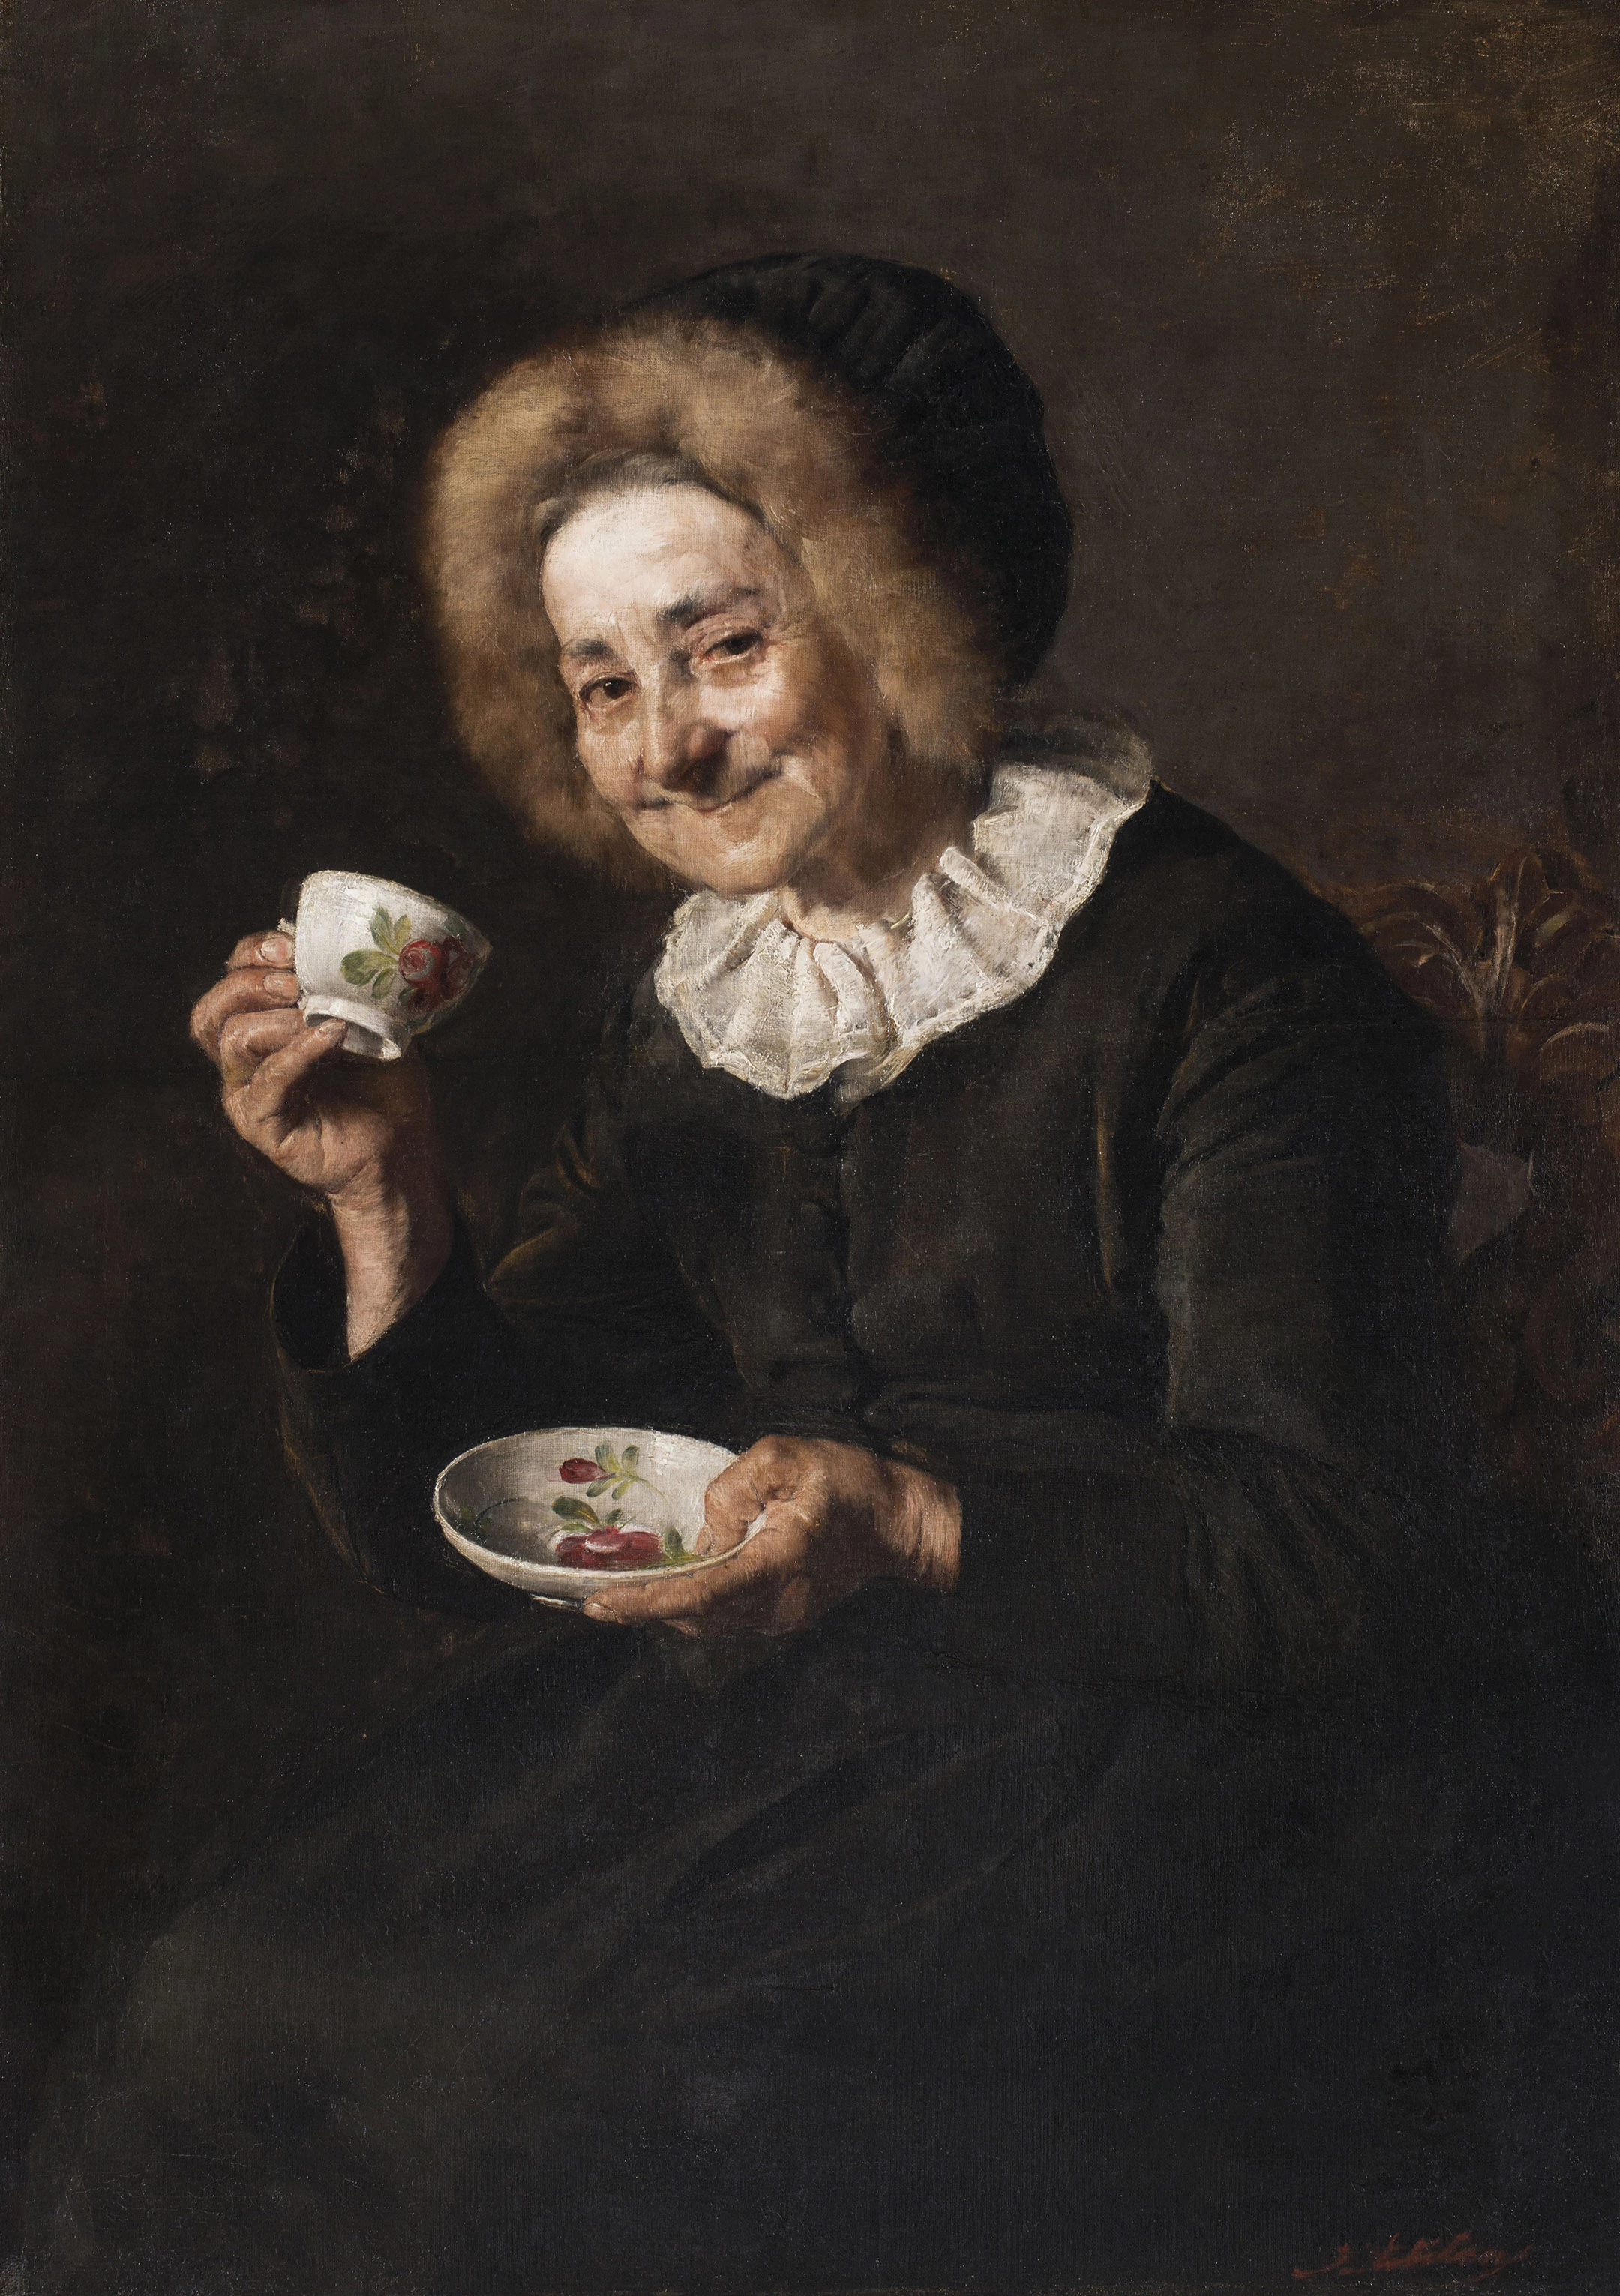 Coffee drinker, Ivana Kobilca